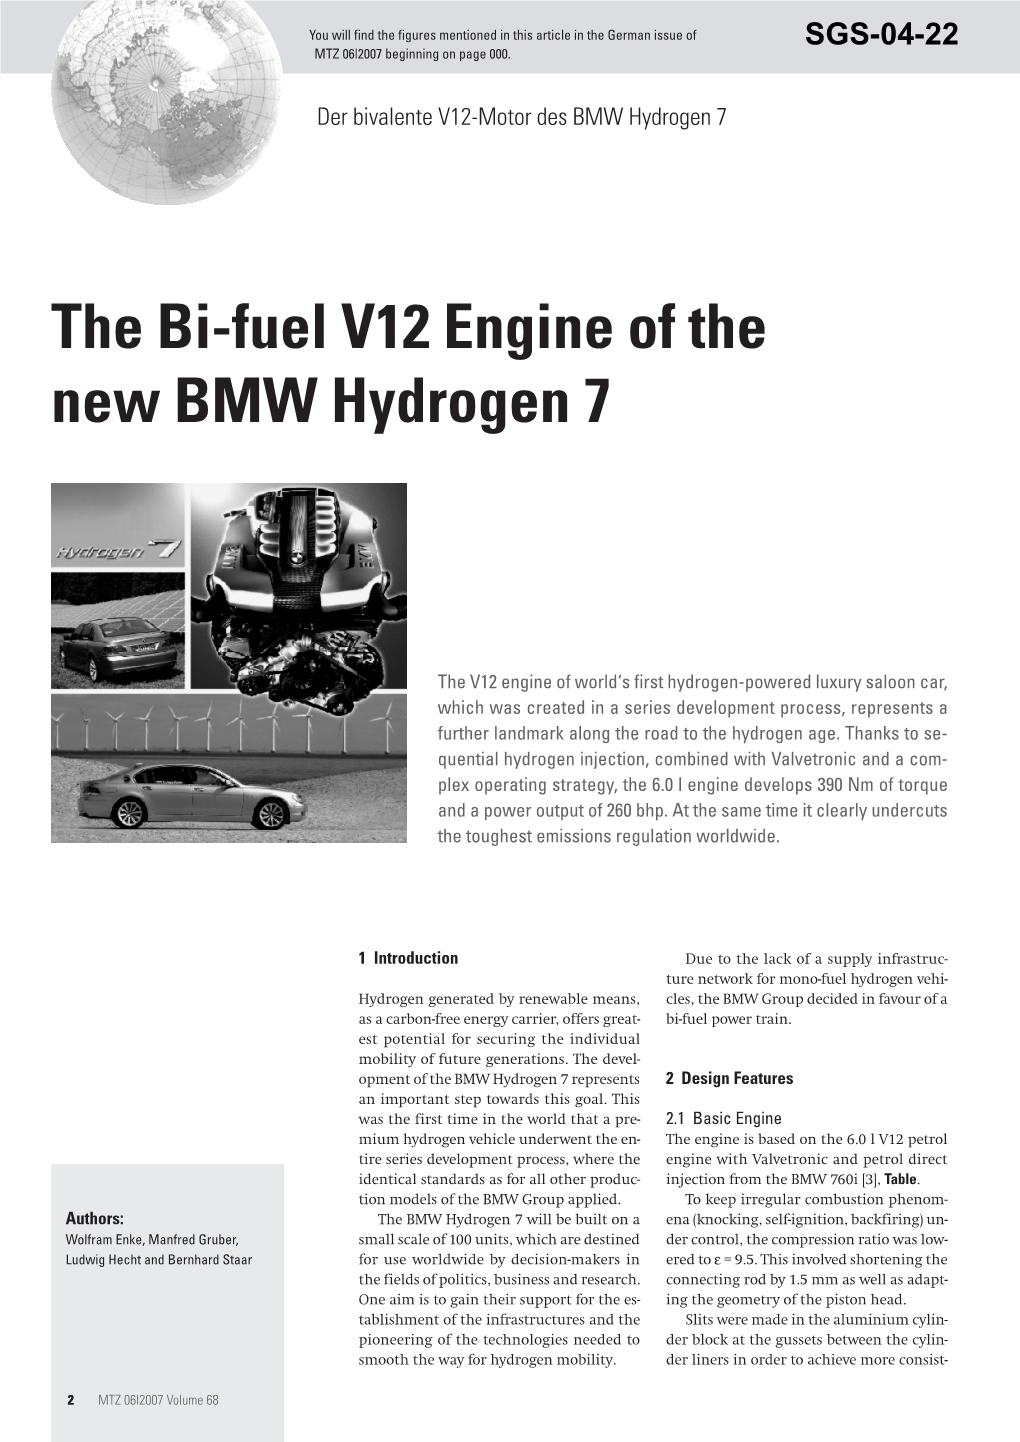 The Bi-Fuel V12 Engine of the New BMW Hydrogen 7